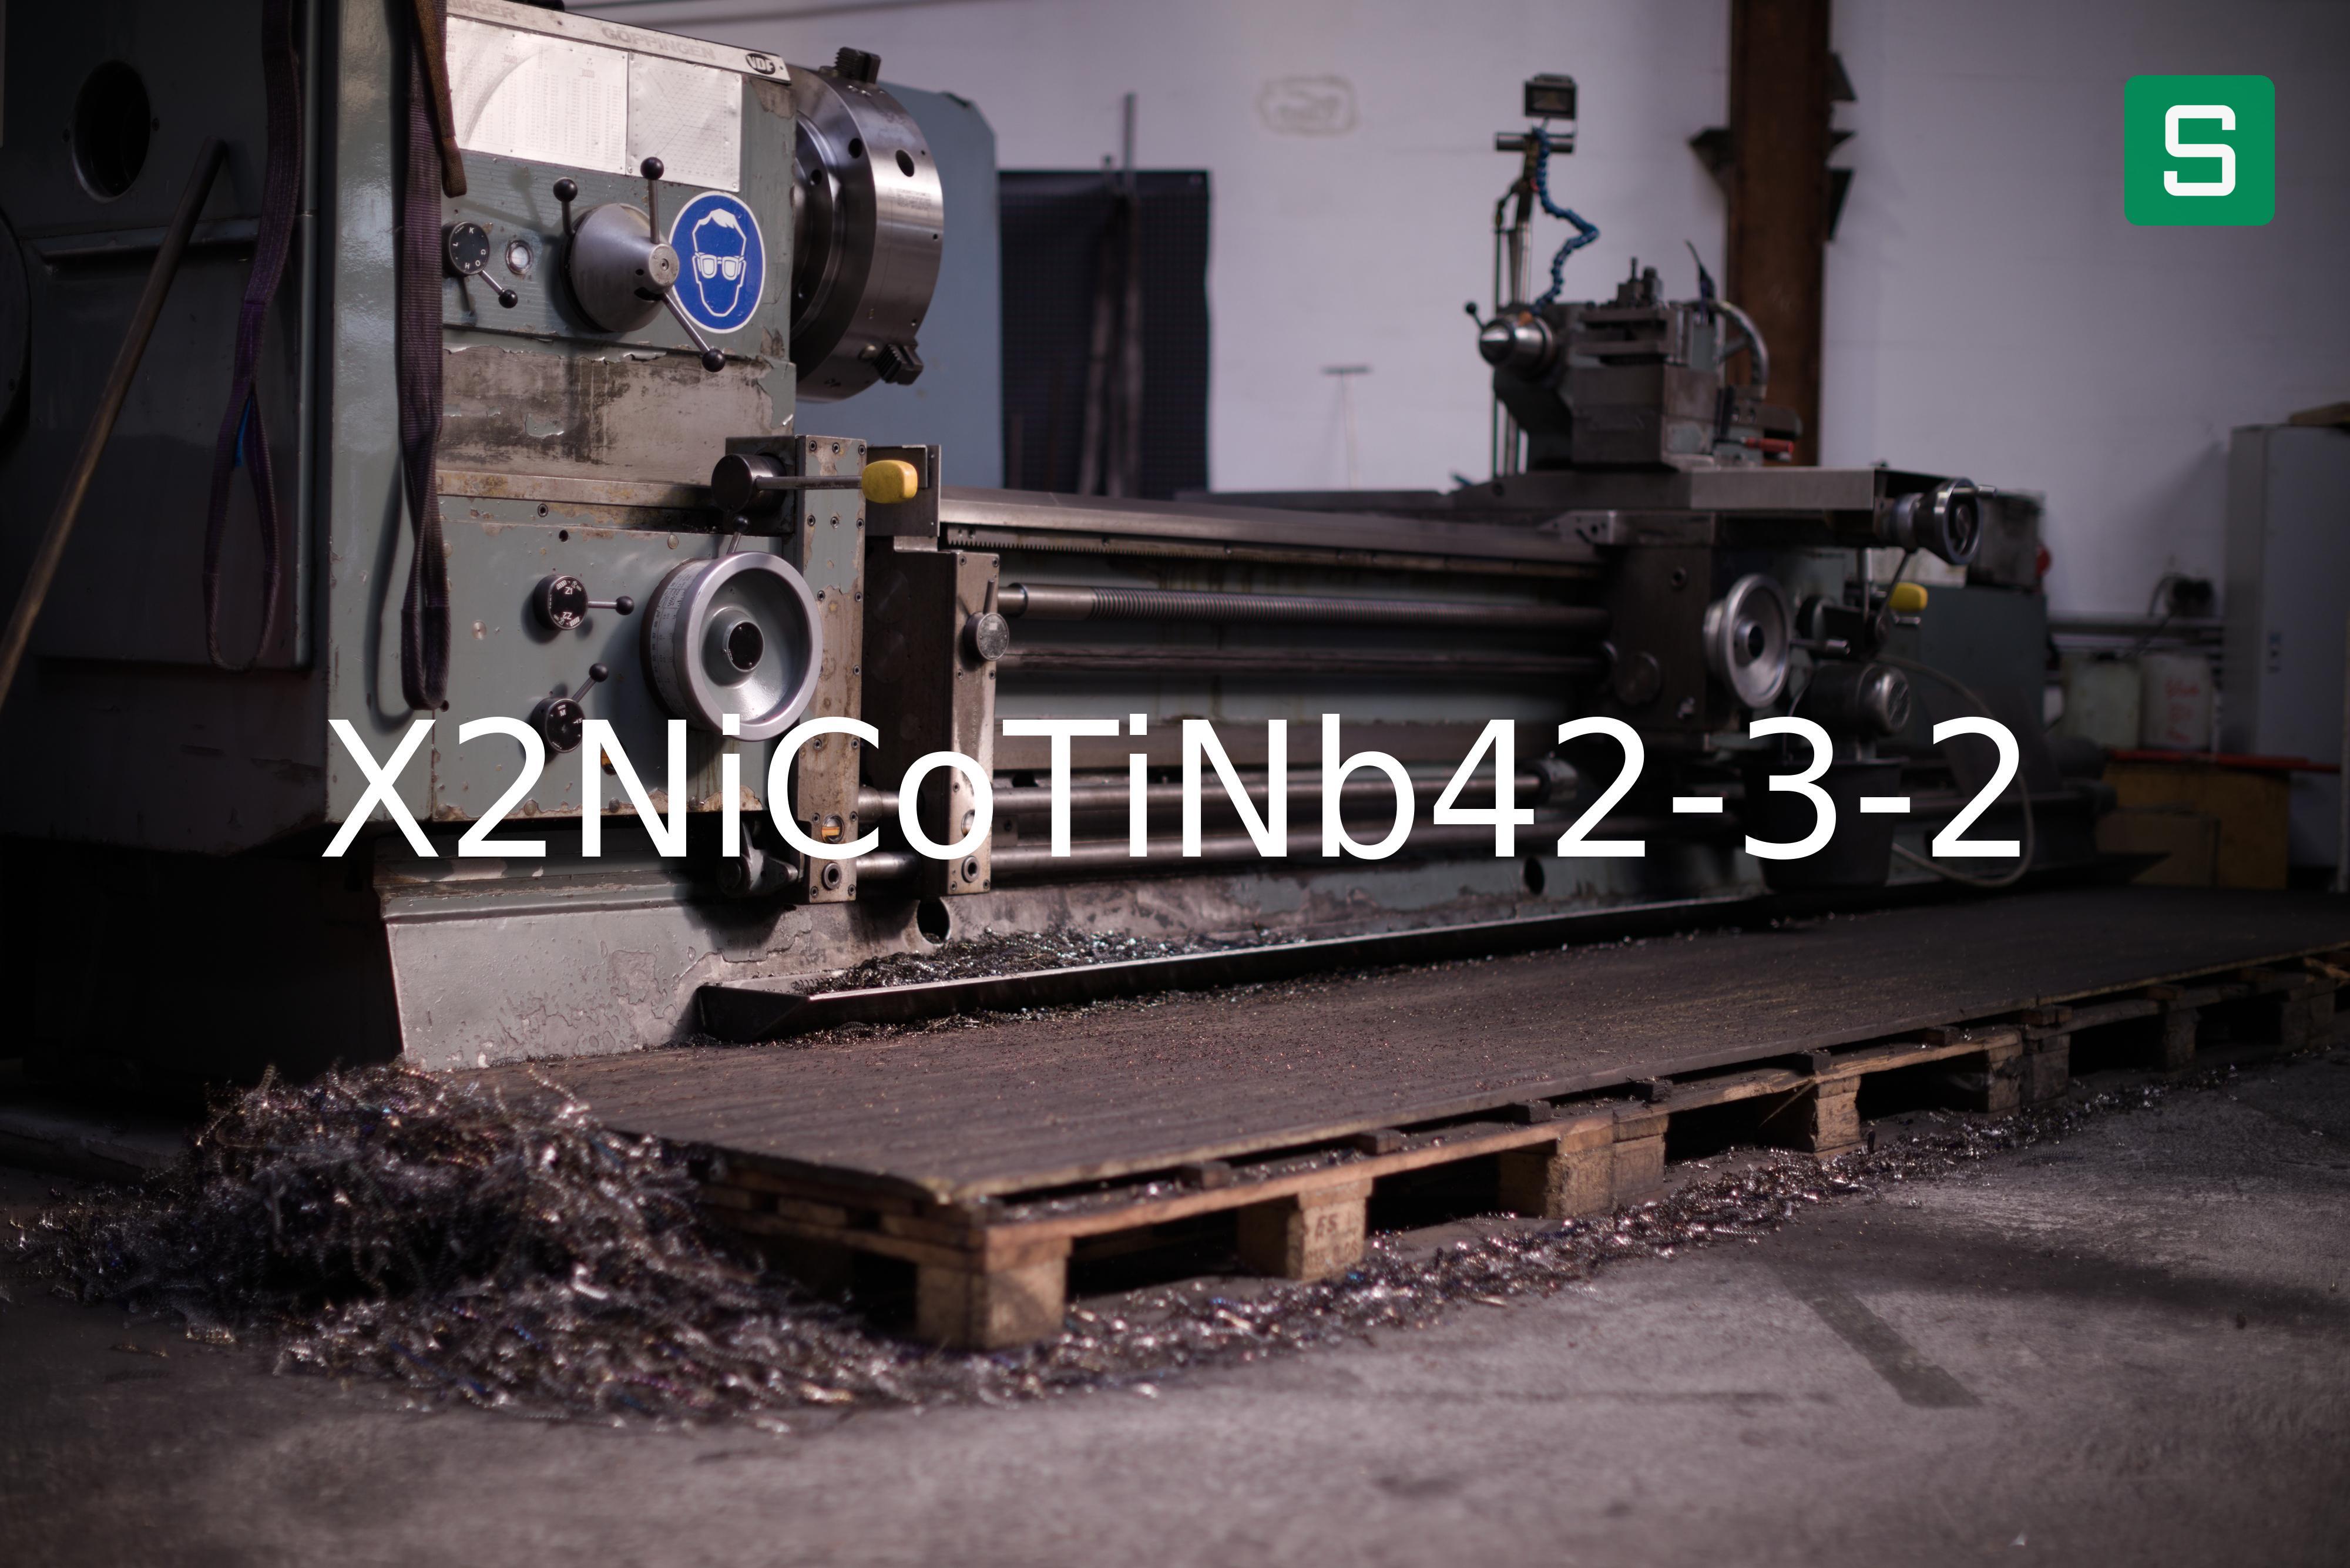 Steel Material: X2NiCoTiNb42-3-2